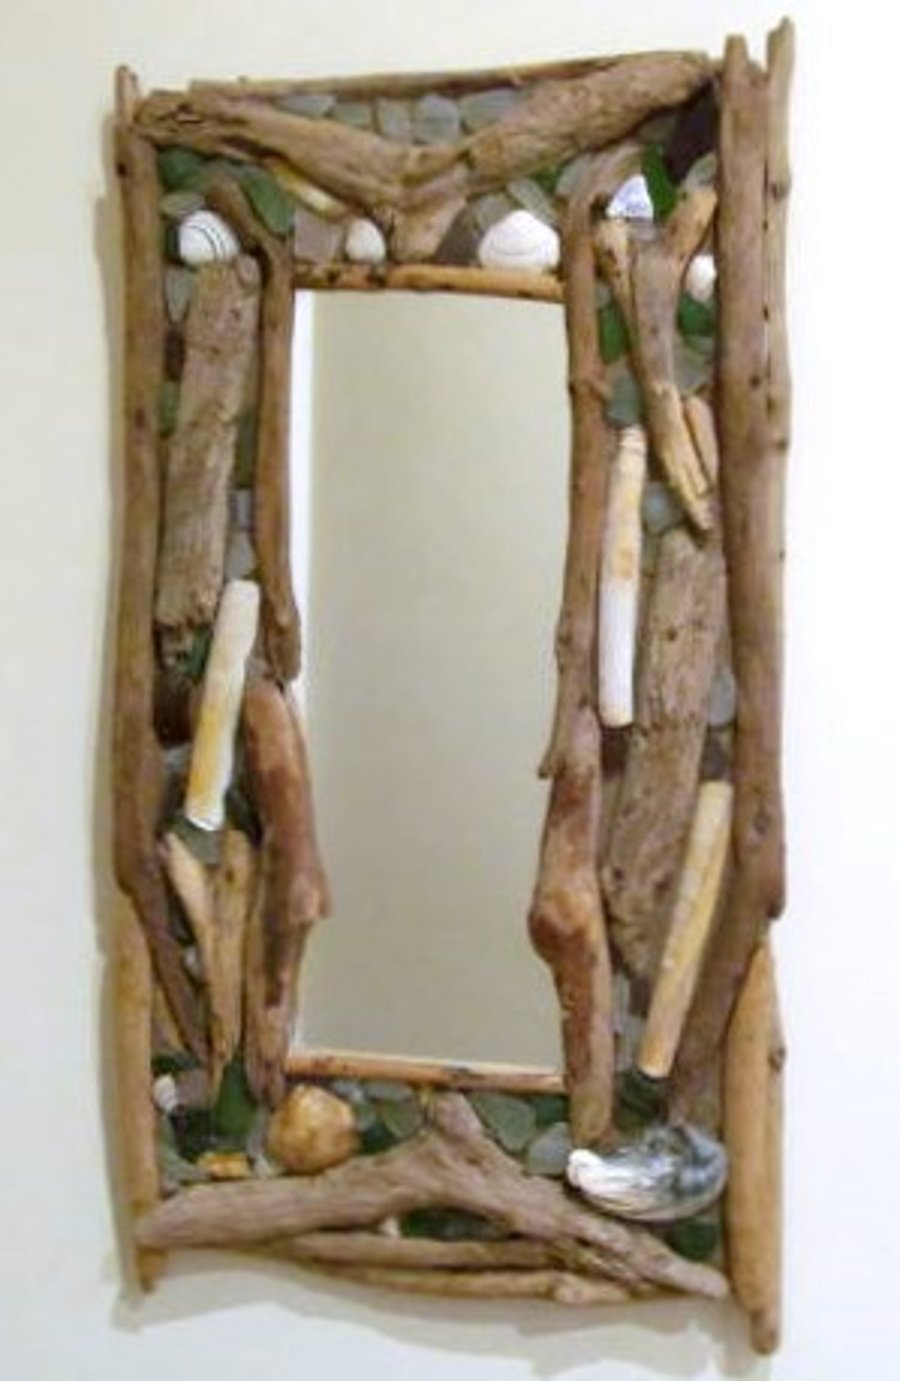 Driftwood mirror